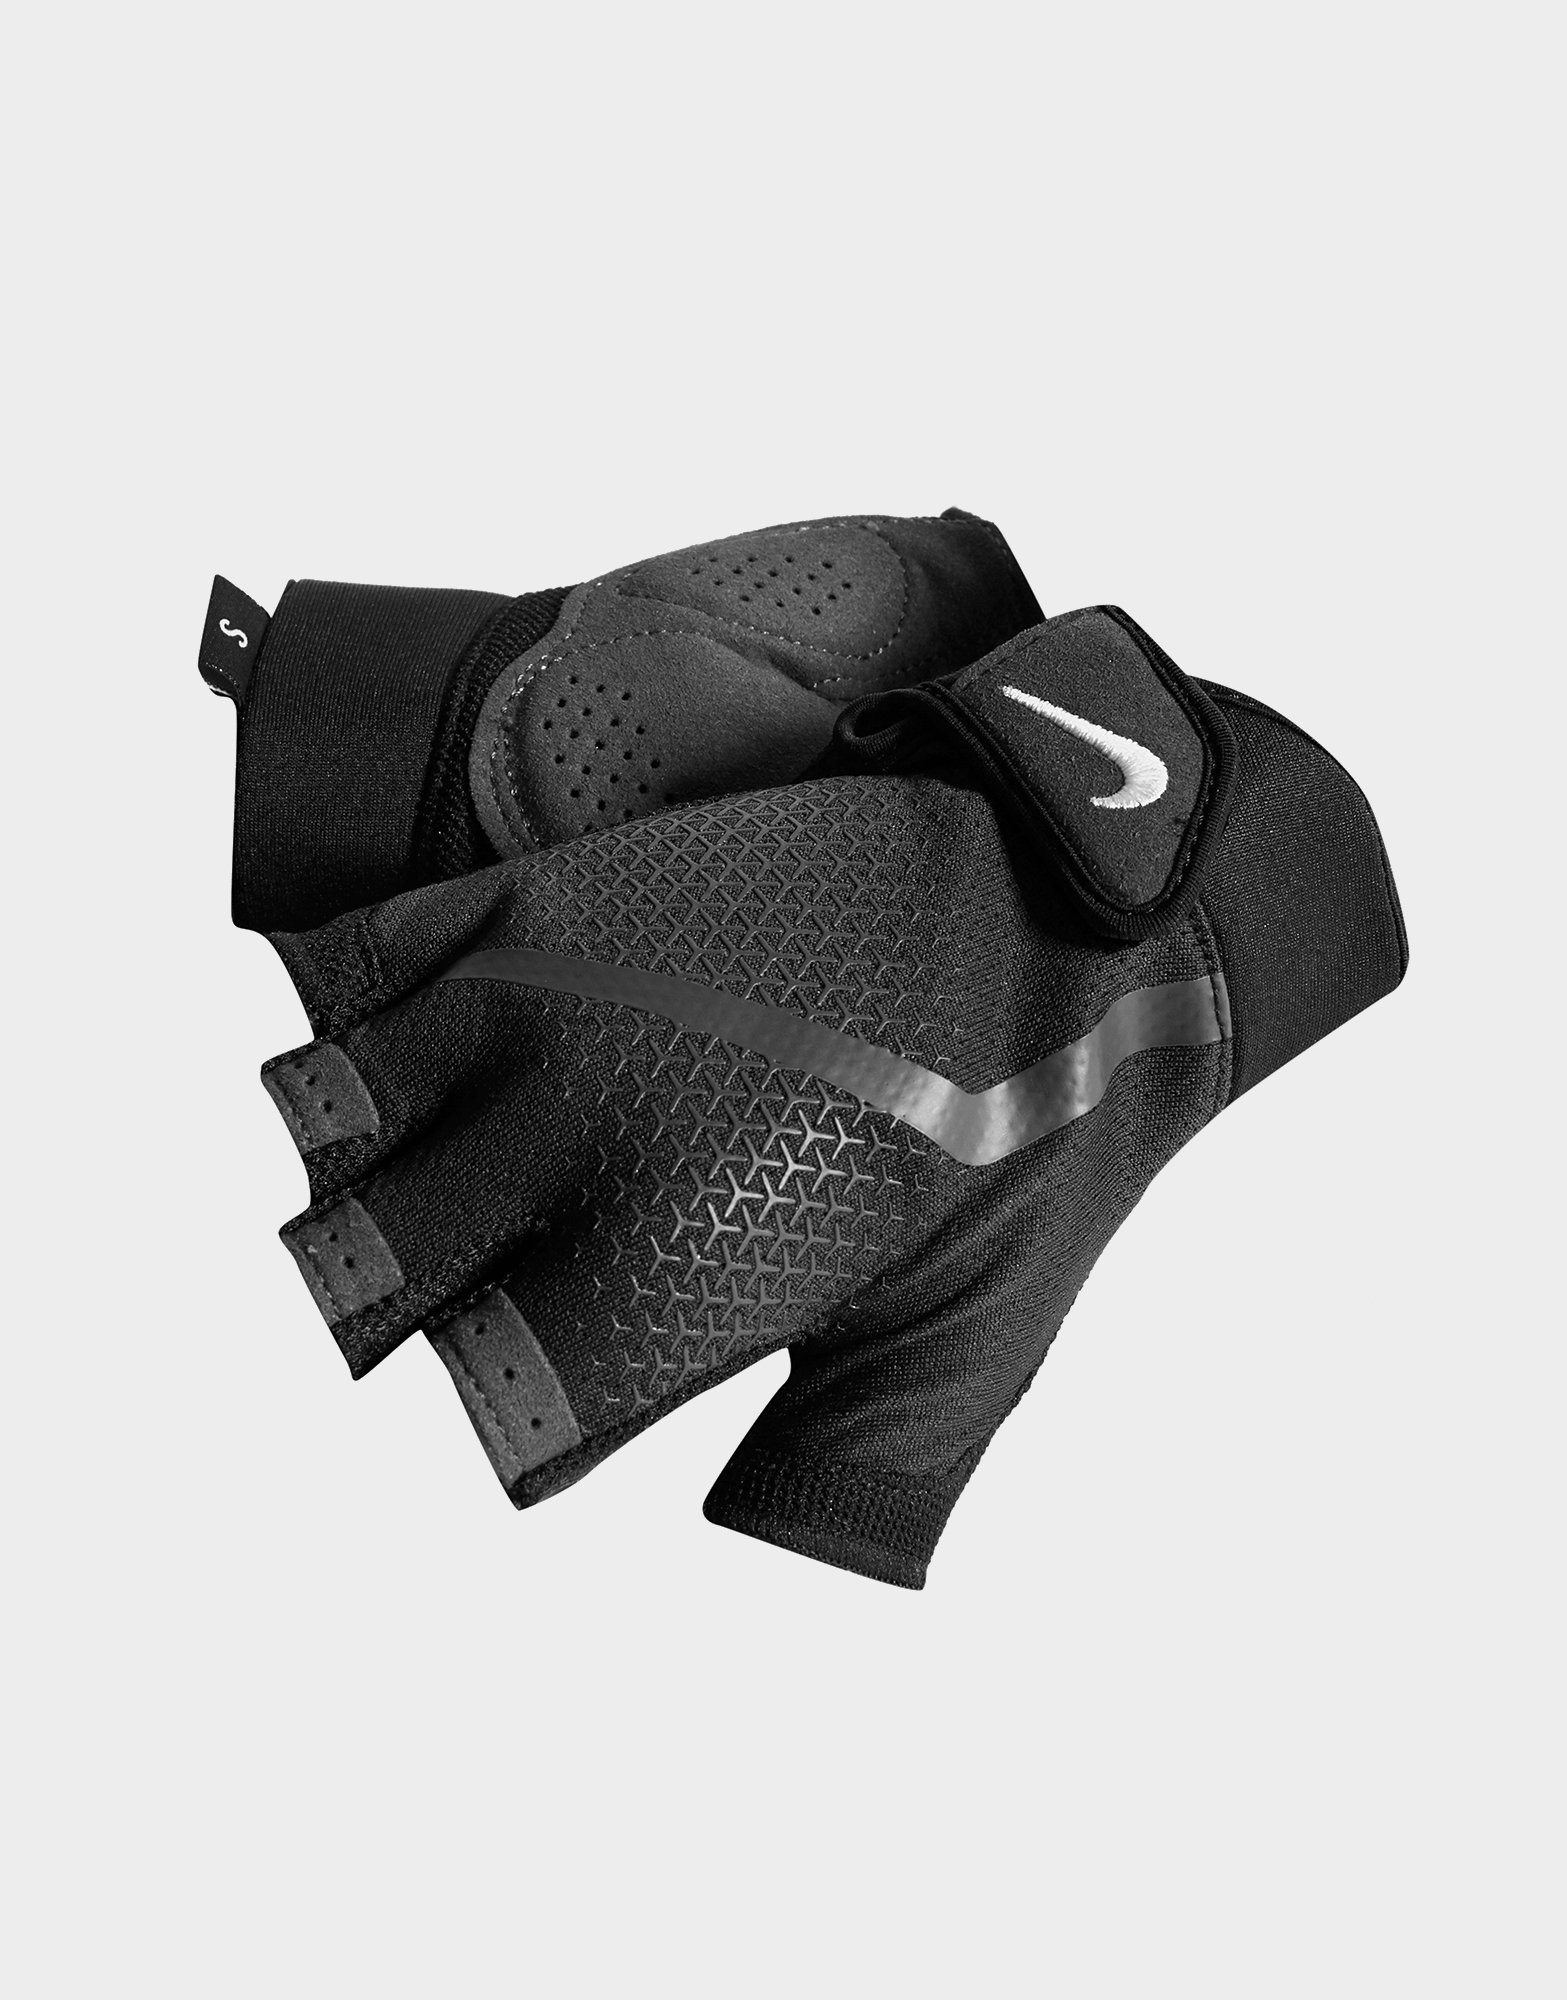 Black Nike Extreme Fitness Gloves JD Sports Global